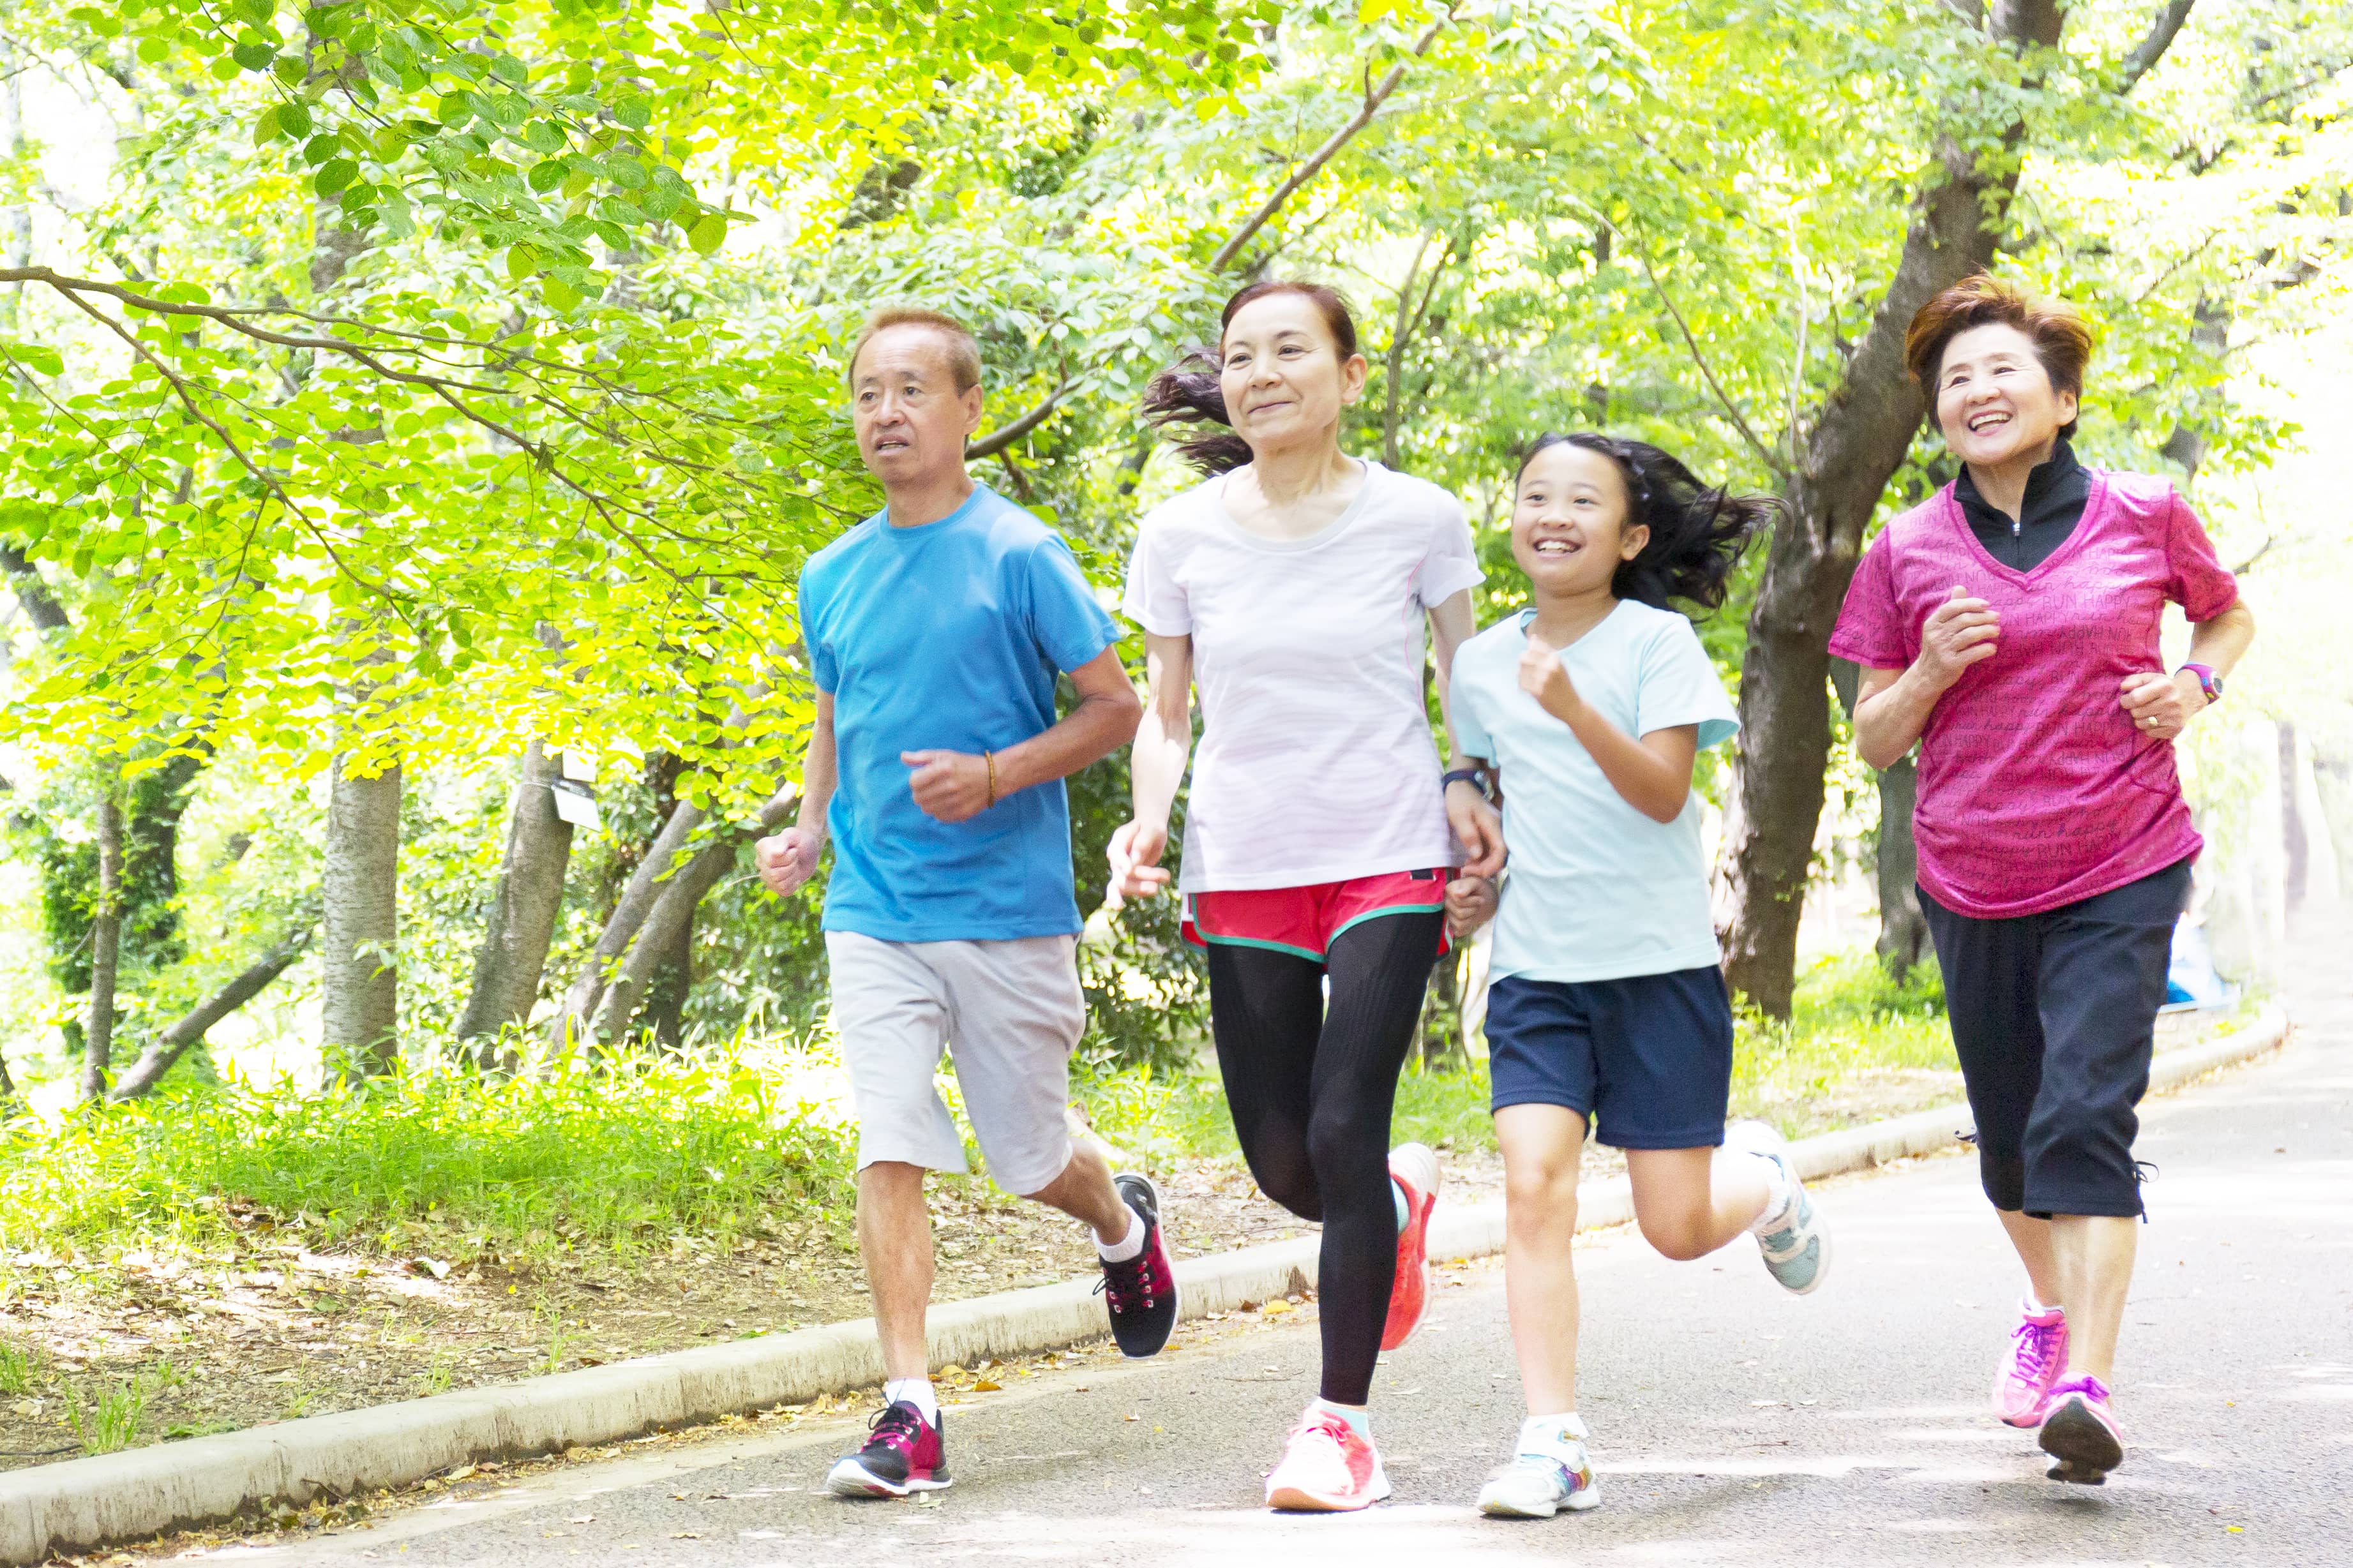 Exercise regularly to improve respiratory health